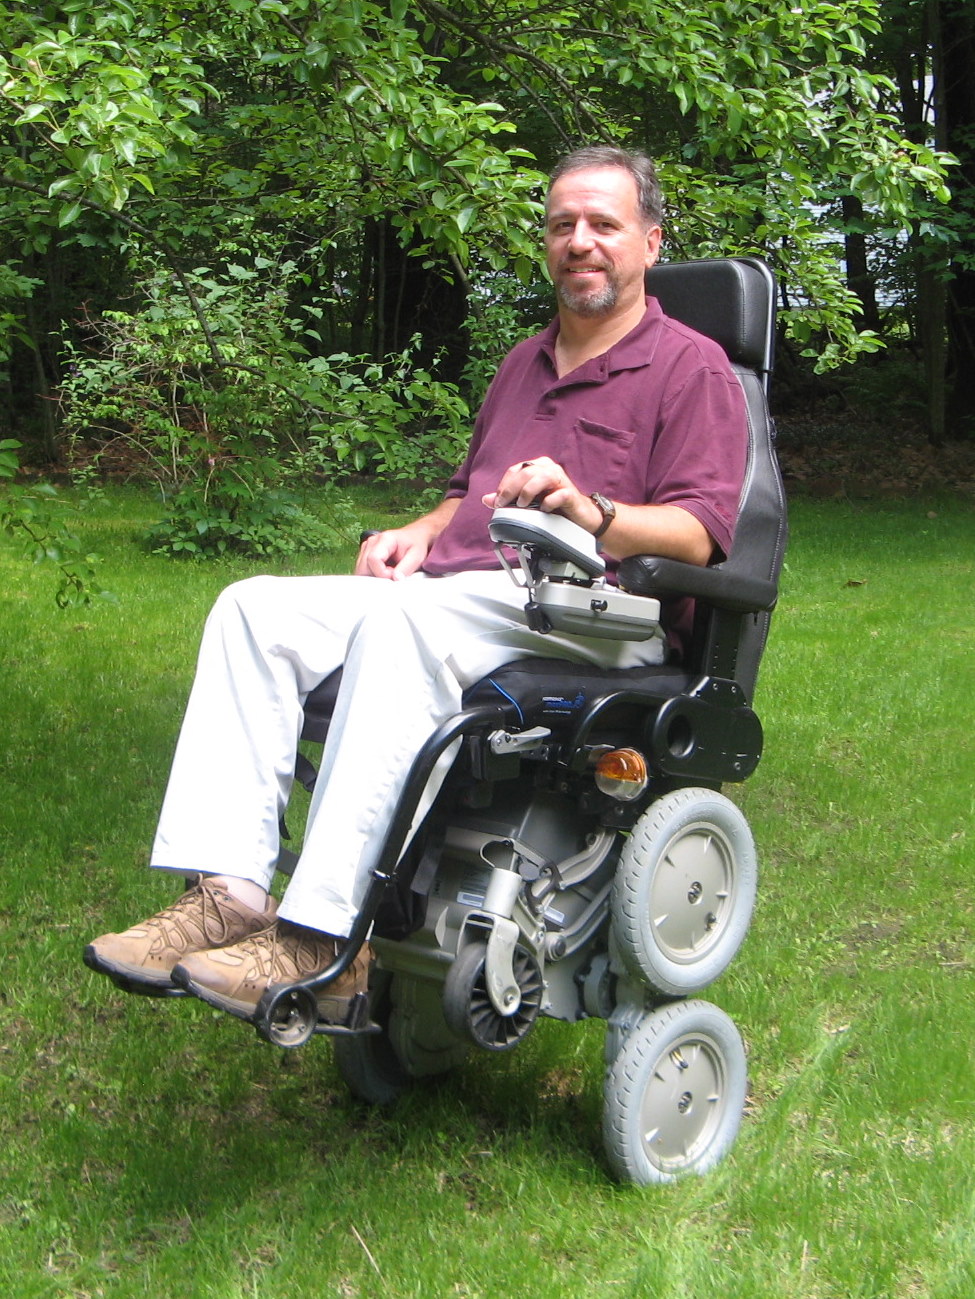 MultipleSclerosis.net community advocate Mitch Sturgeon